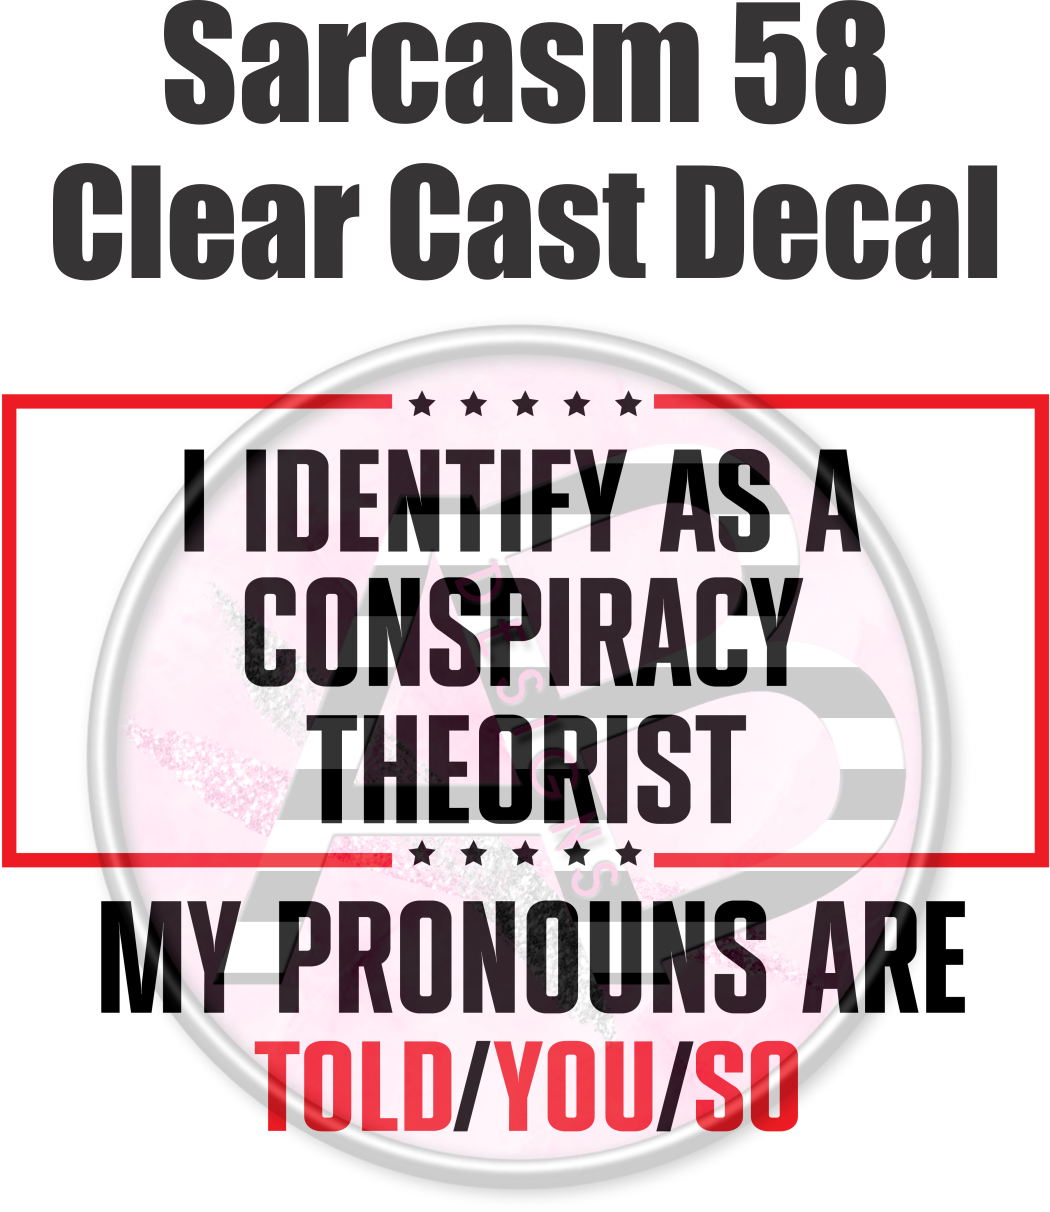 Sarcasm 58 - Clear Cast Decal - 146